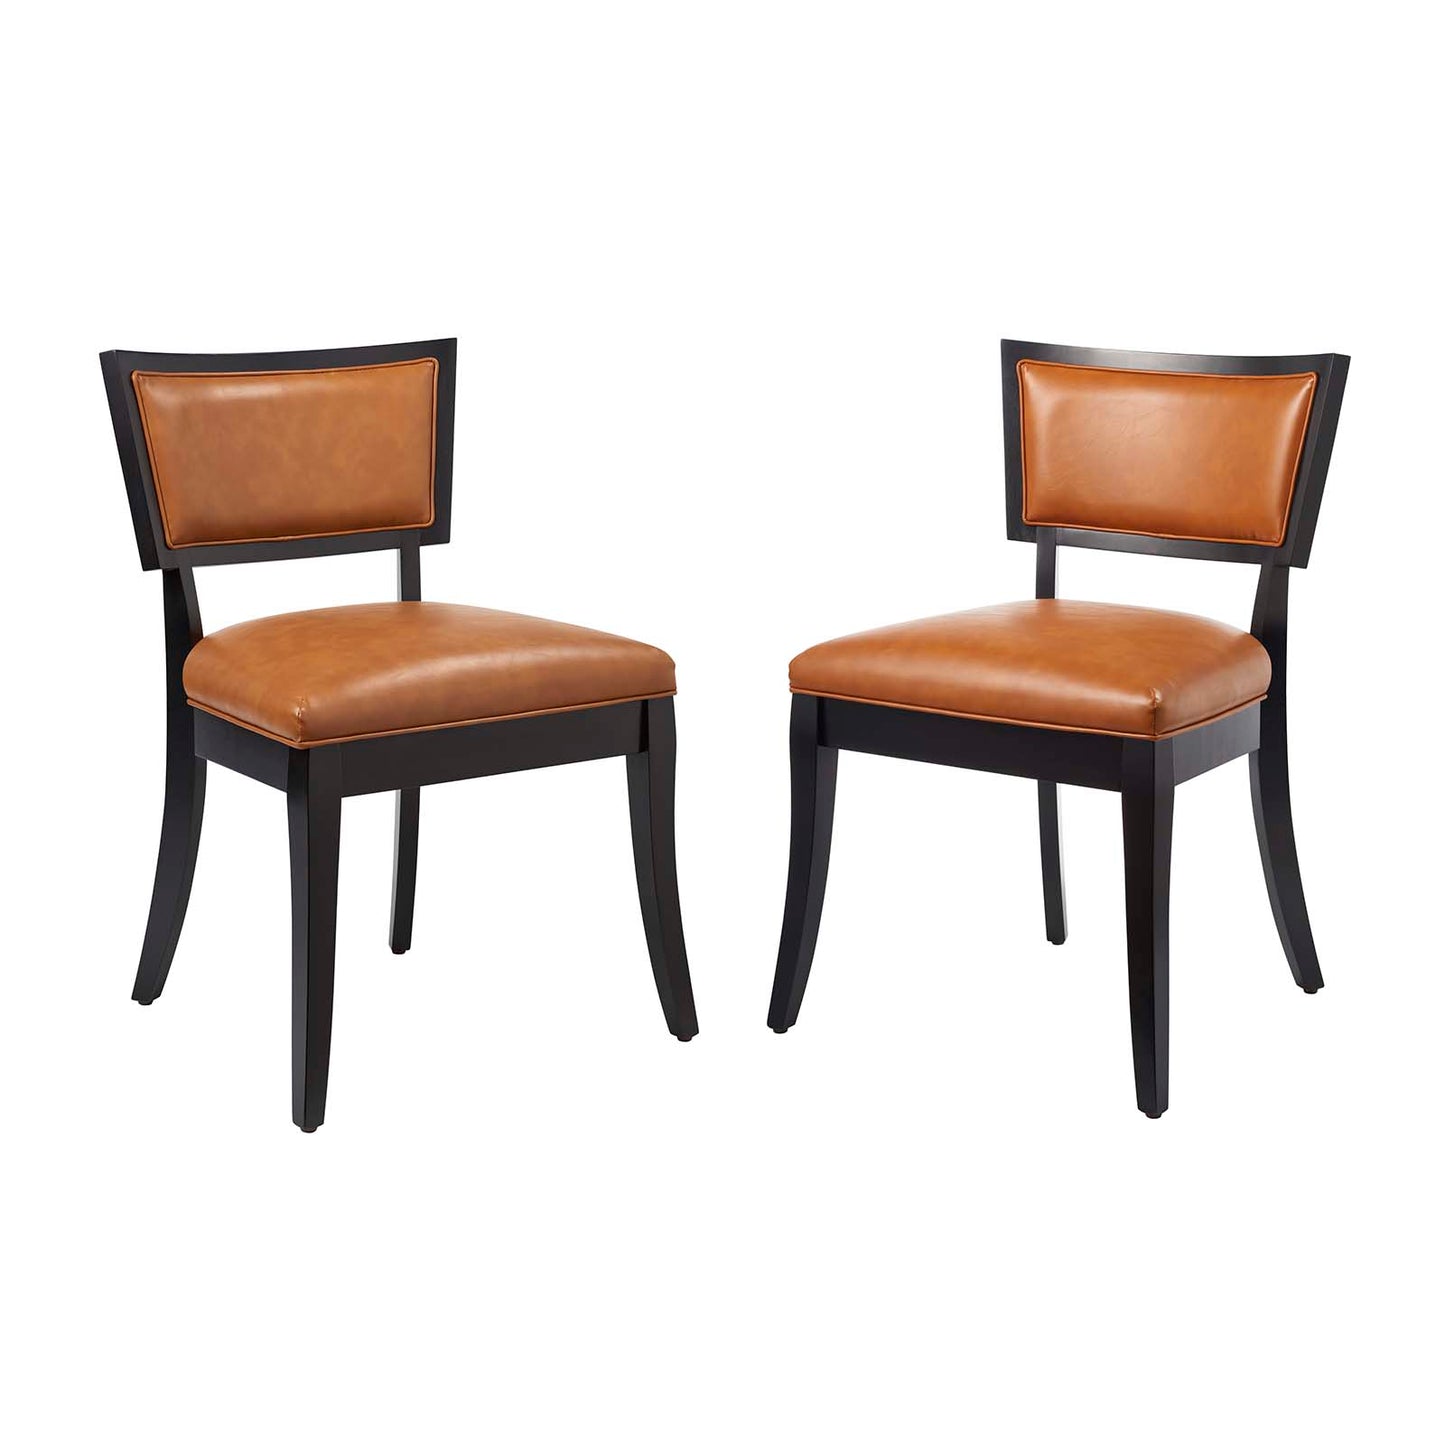 Pristine Vegan Leather Dining Chairs - Set of 2 Tan EEI-4558-TAN